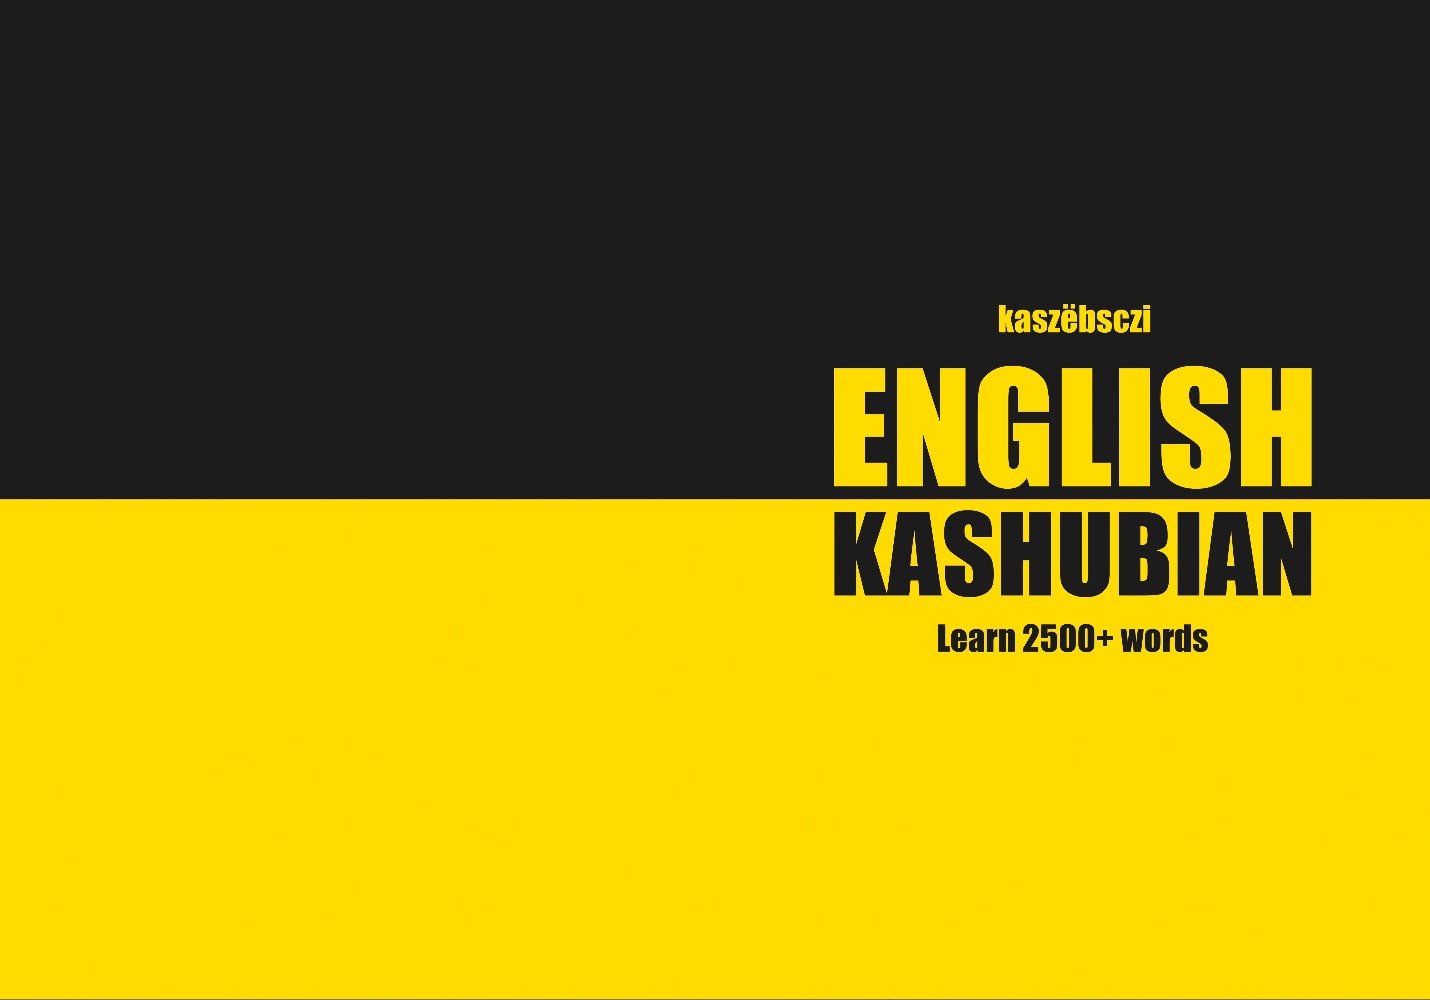 Kashubian language learning notebook cover